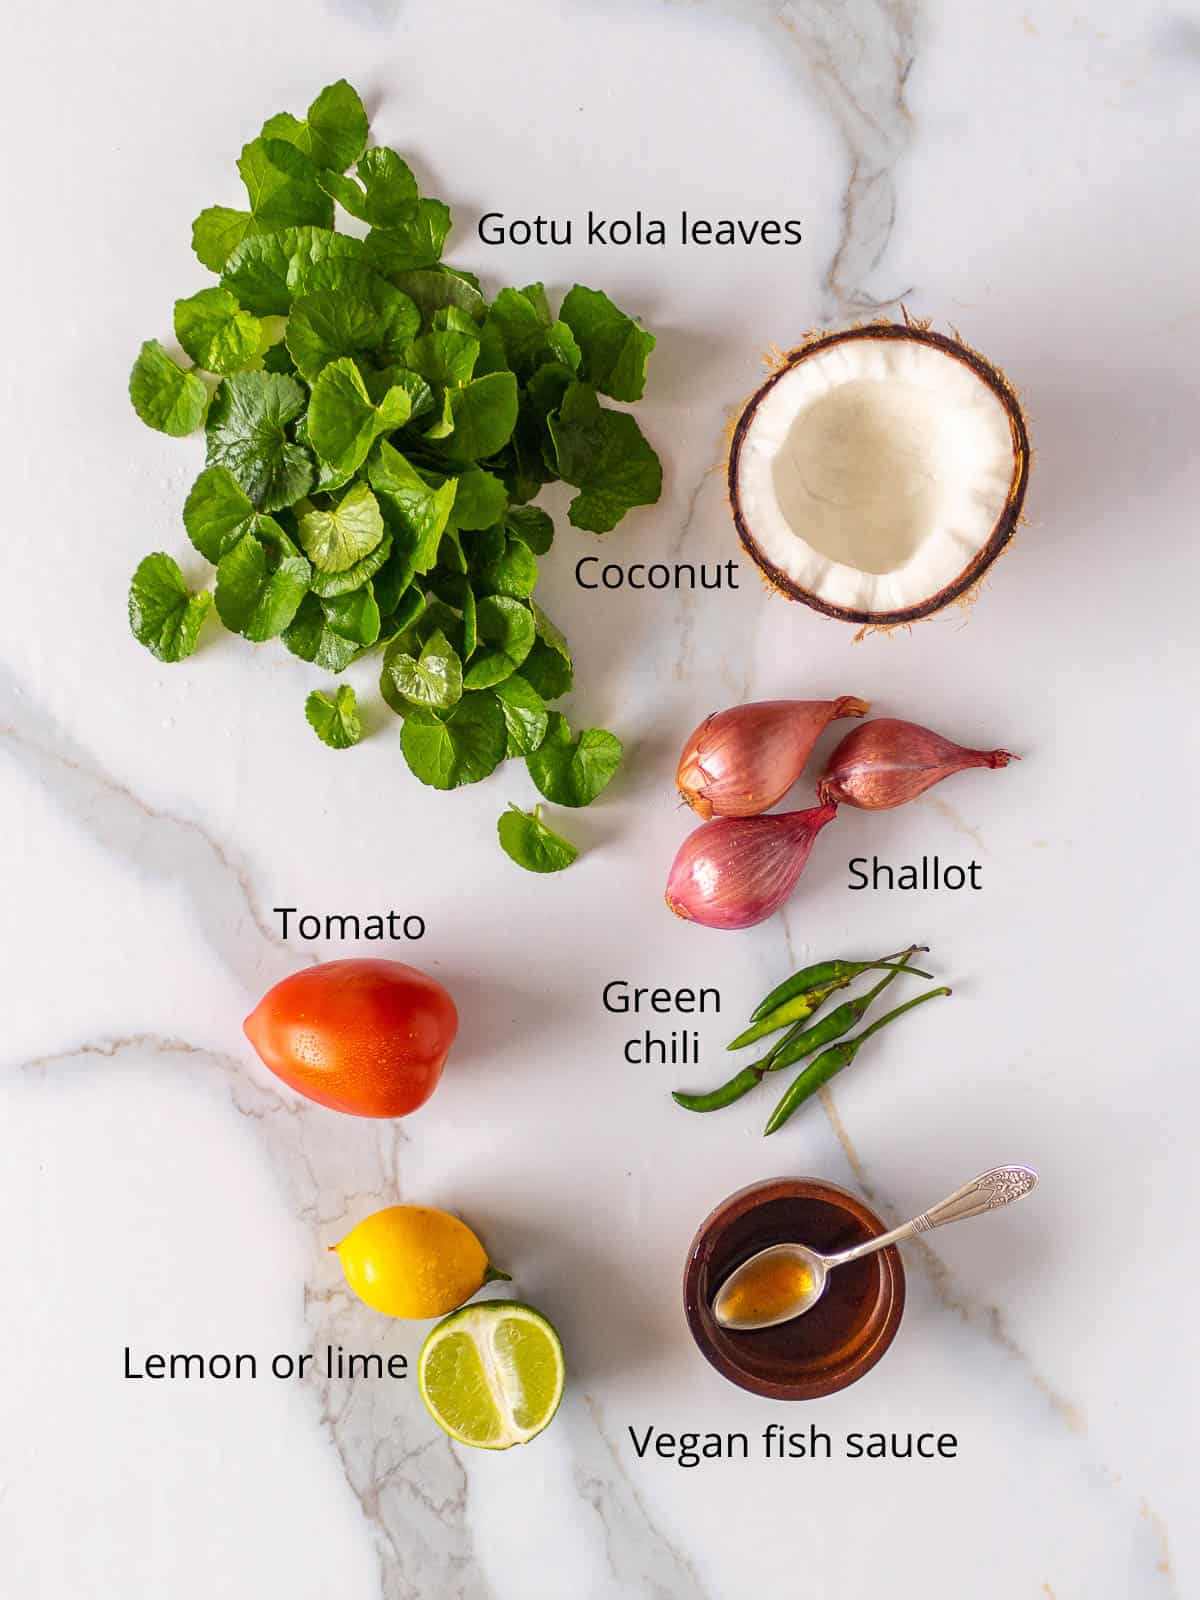 Labeled ingredients for sambol include gotu kola, coconut, lemon, shallot, chili and vegan fish sauce.